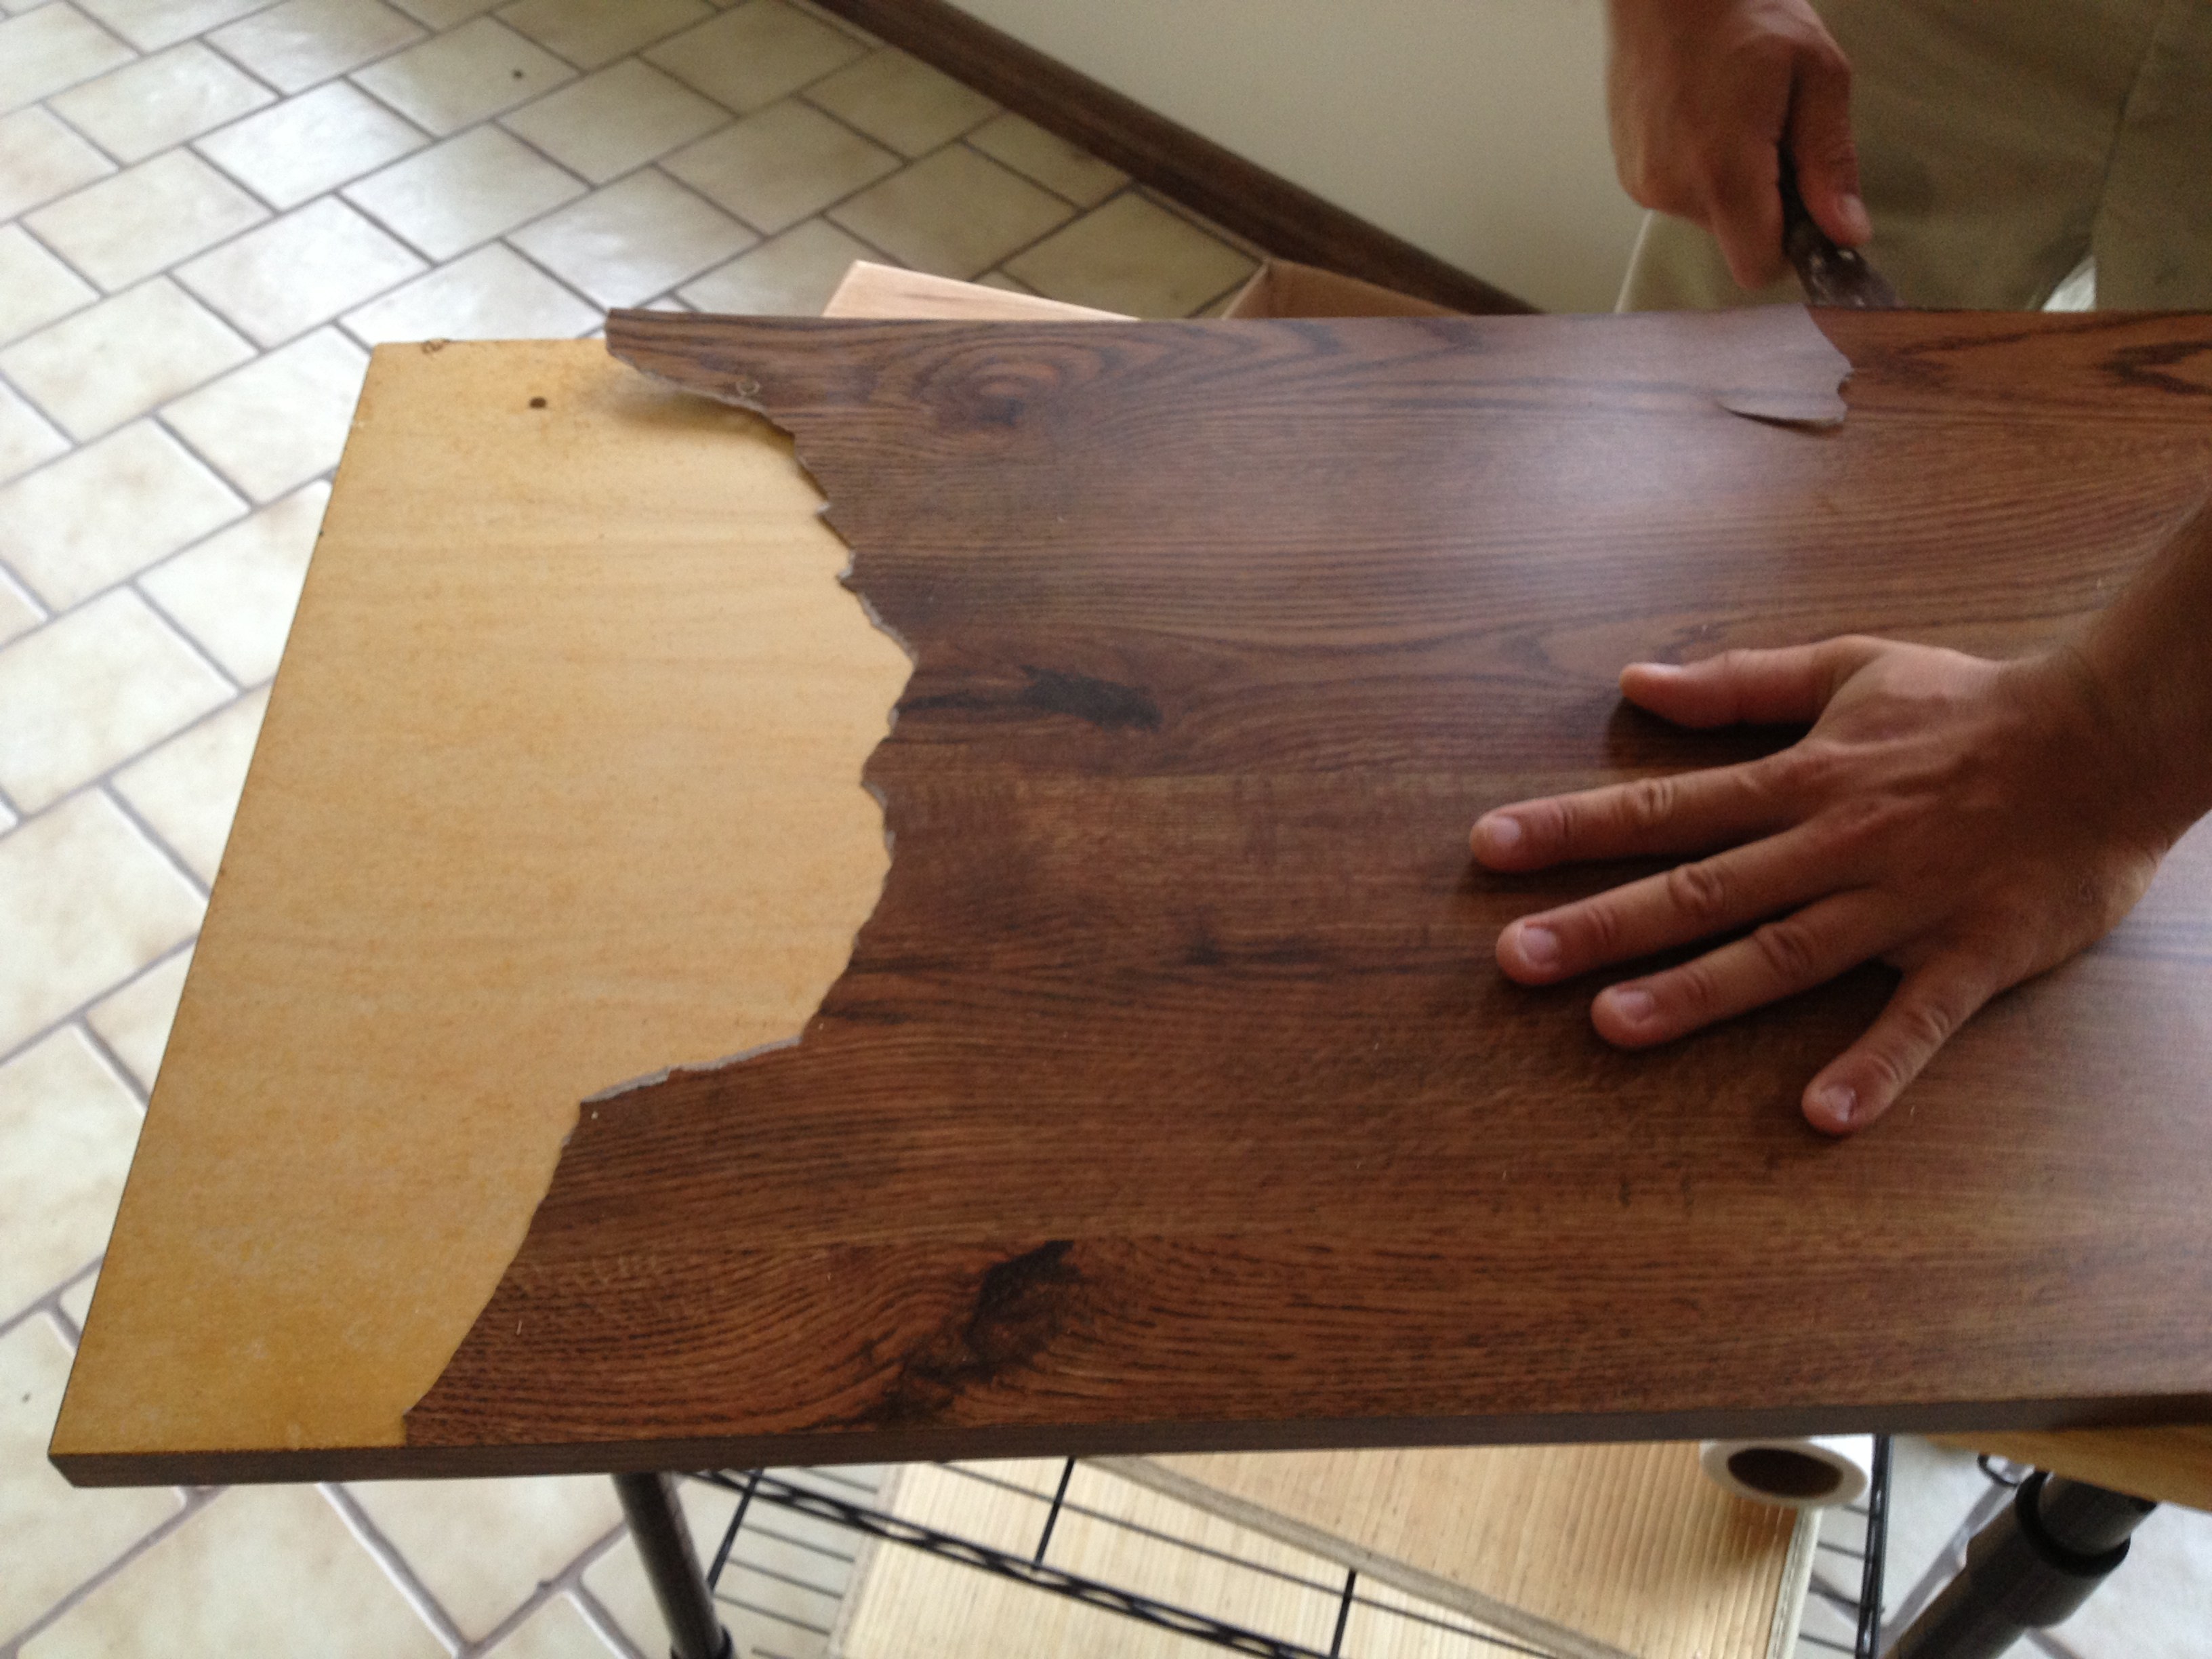 реставрация стола из шпона в домашних условиях